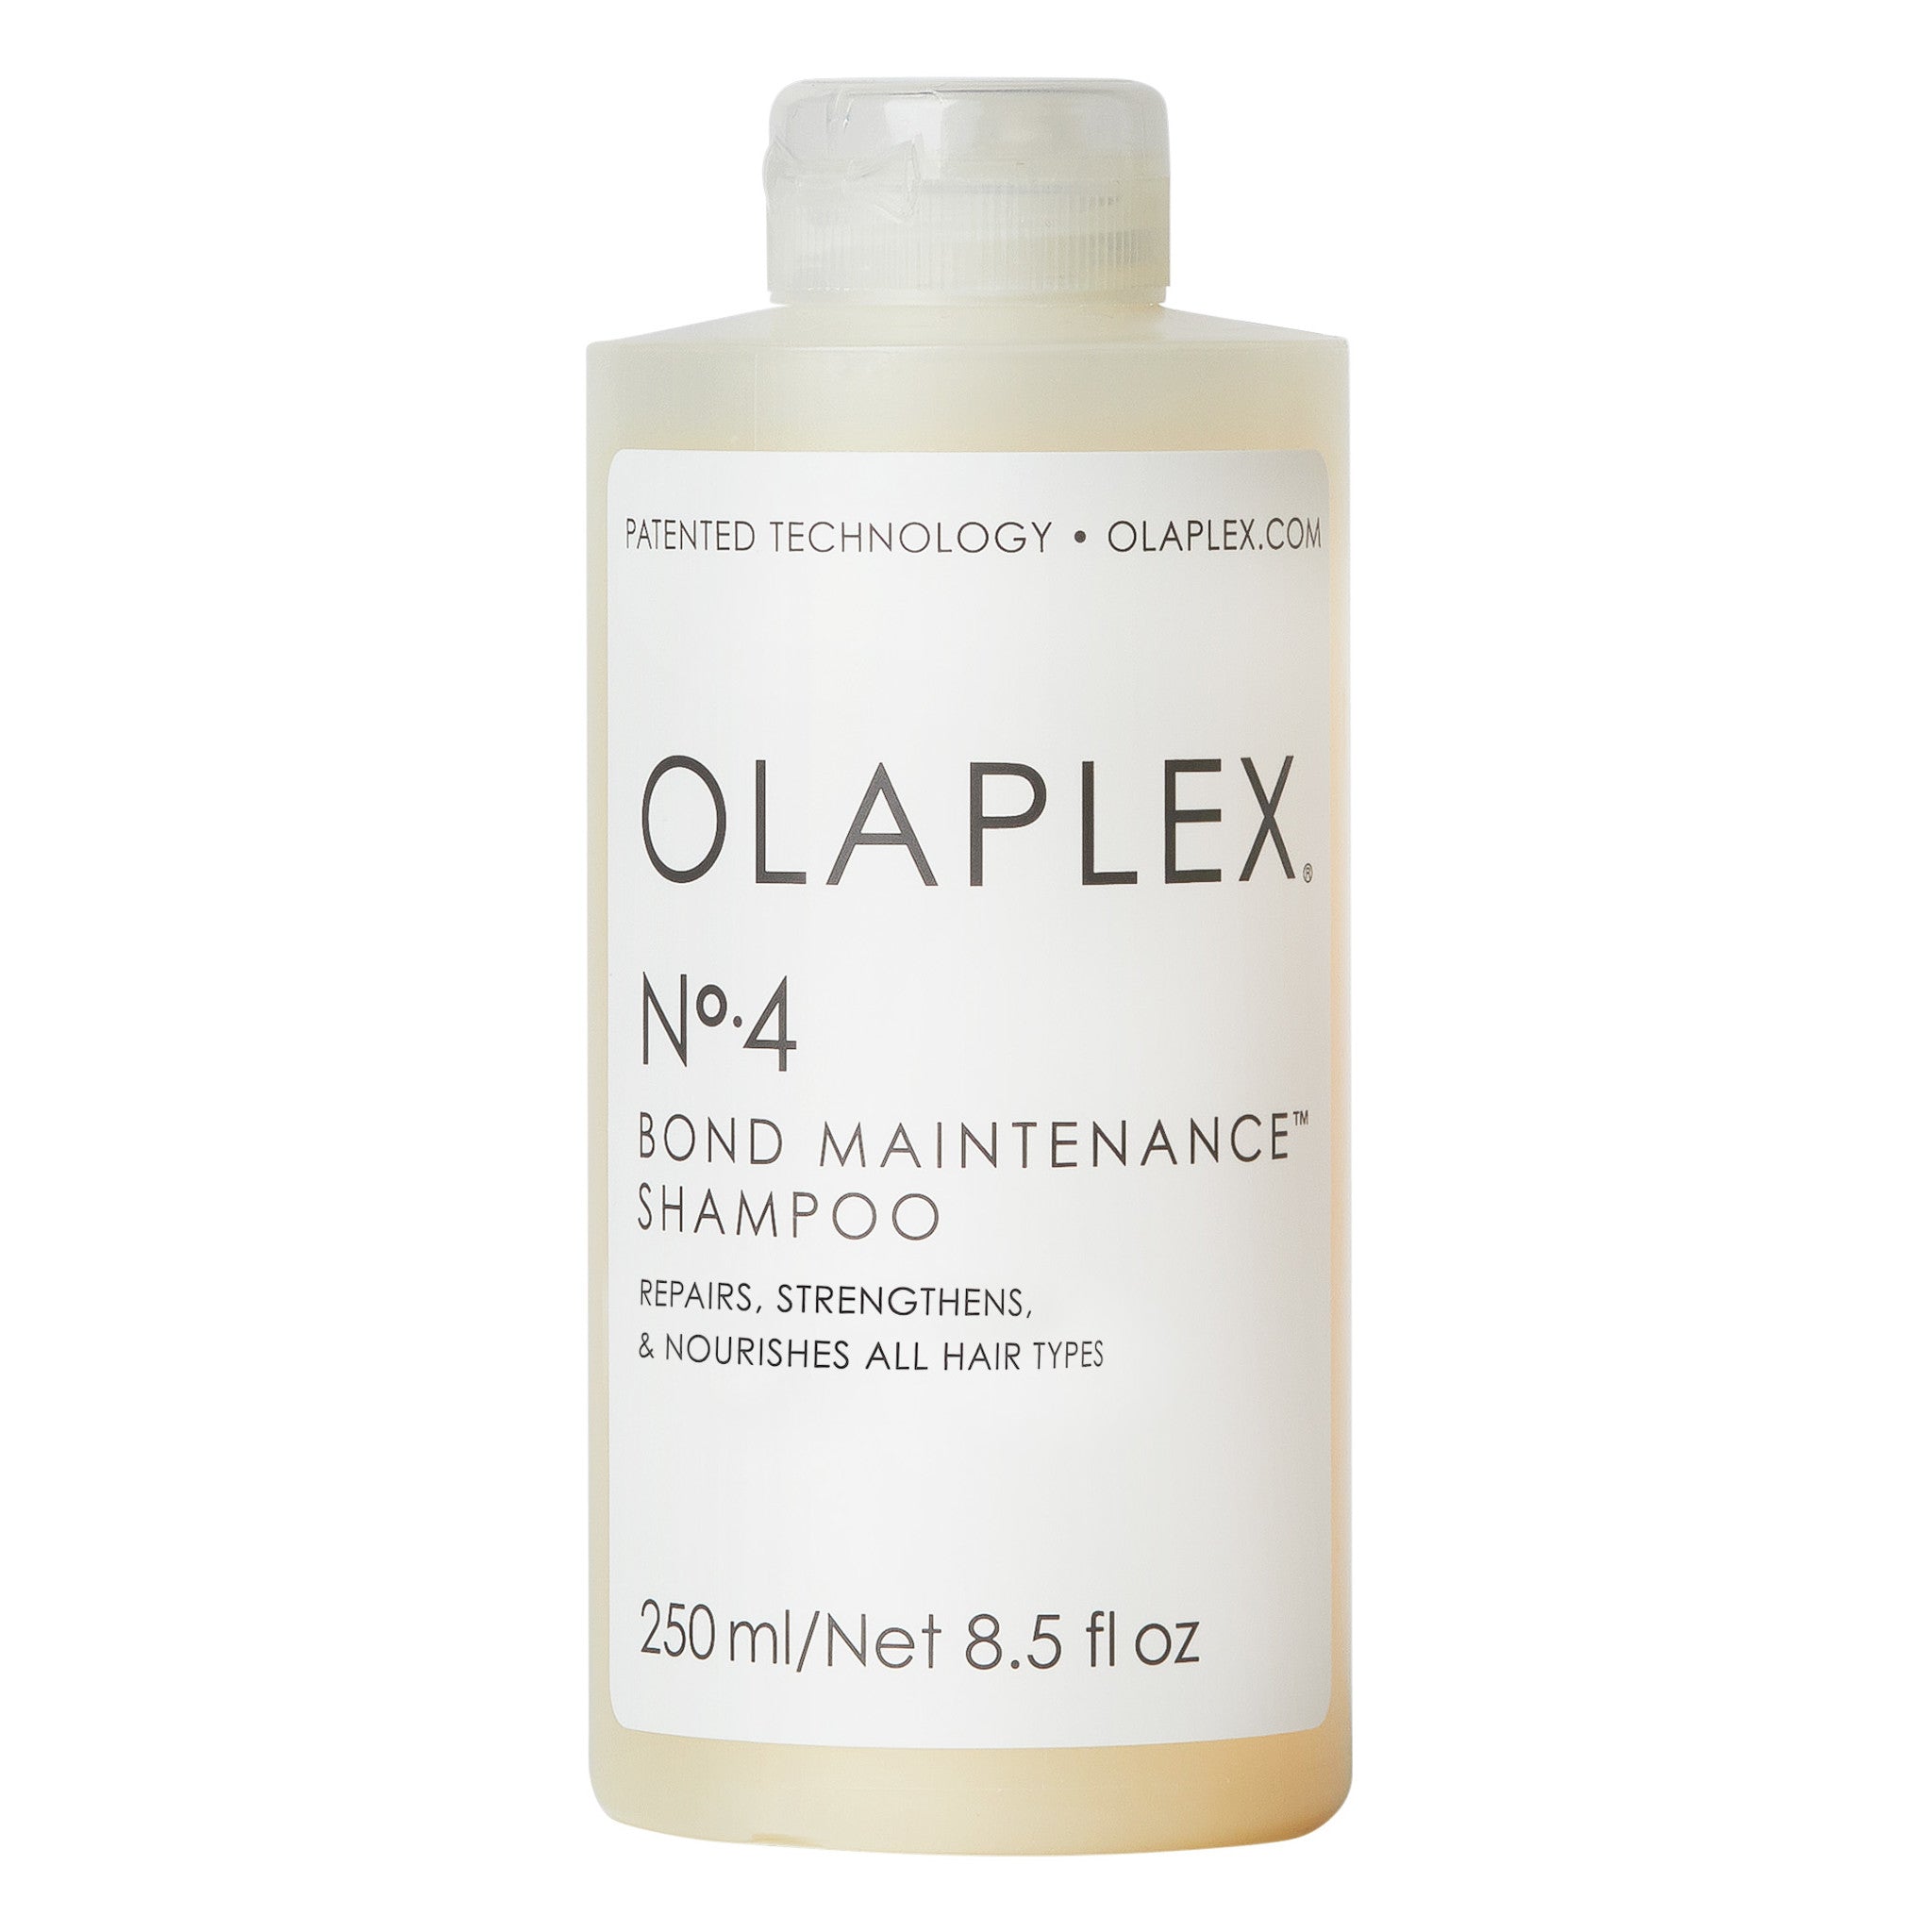 Olaplex No.4 Bond Maintenance Shampoo Size variant: 8.5 fl oz | 250 ml main image. This product is for black hair